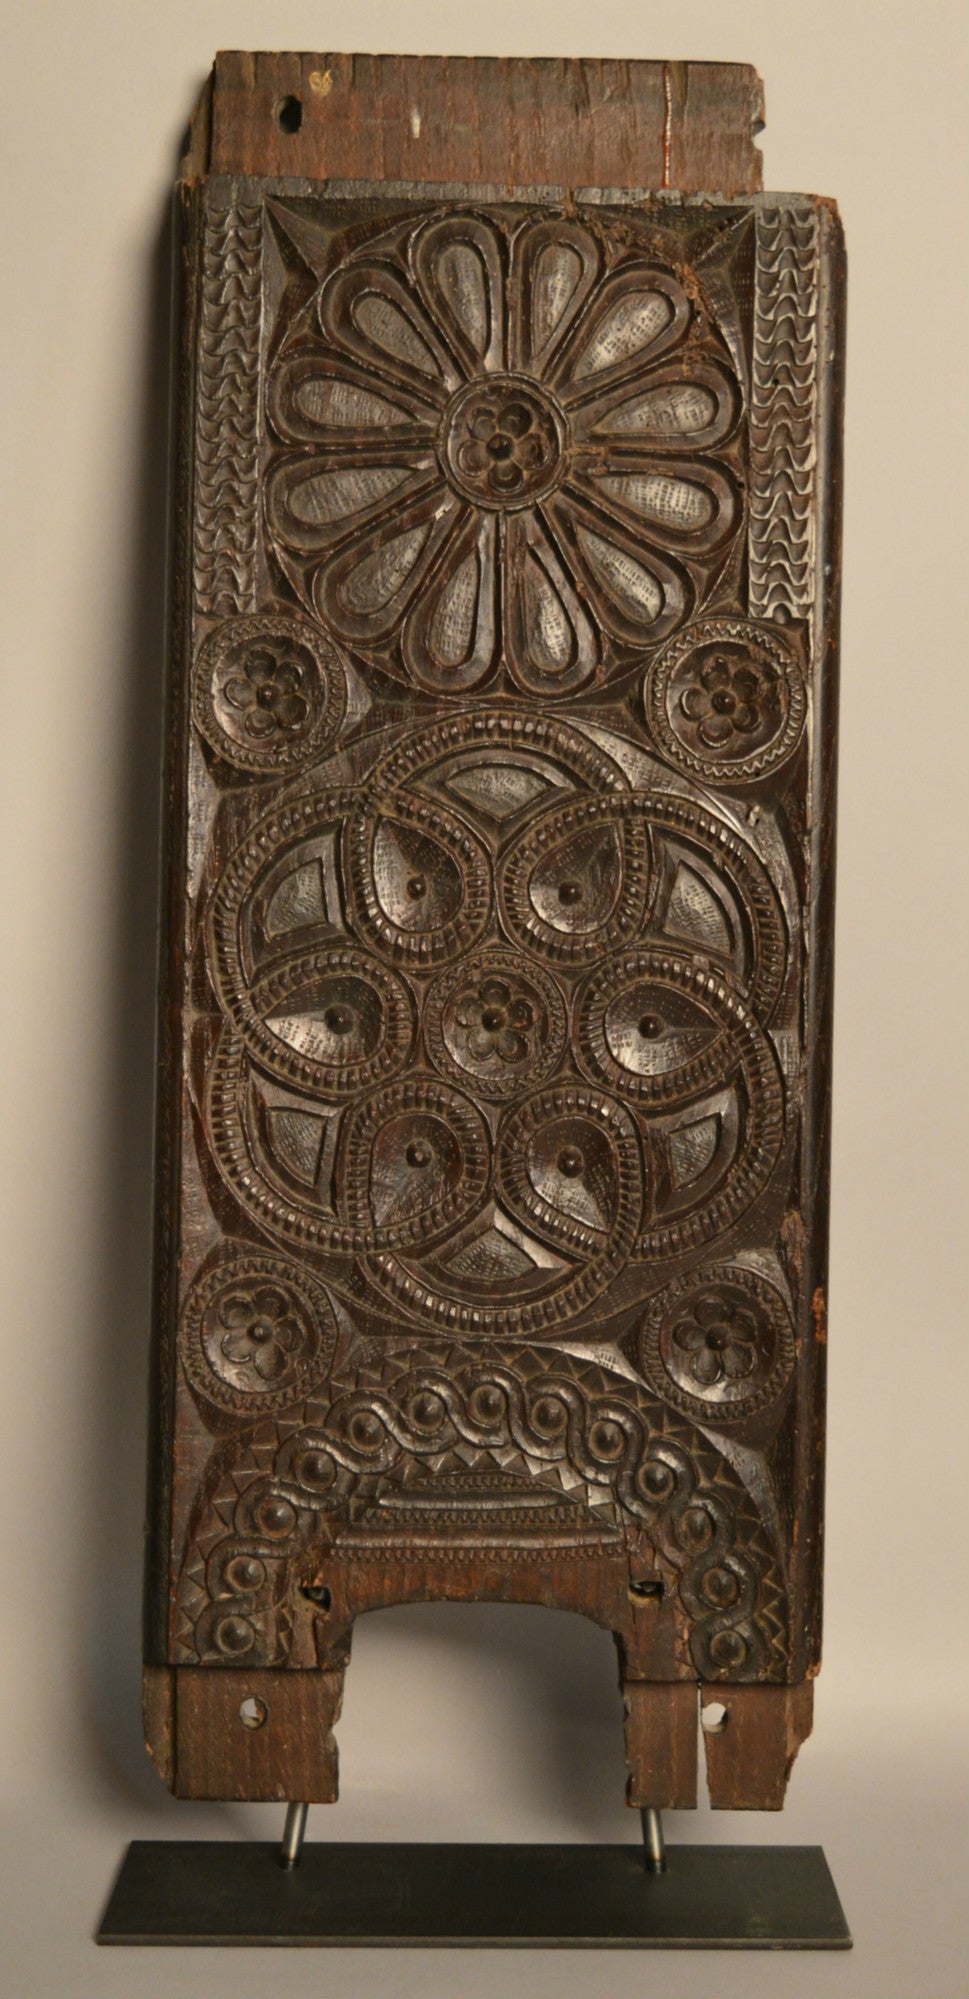 Northern Irish Irish Carved Wood Fragment, Late 17th-Early 18th Century